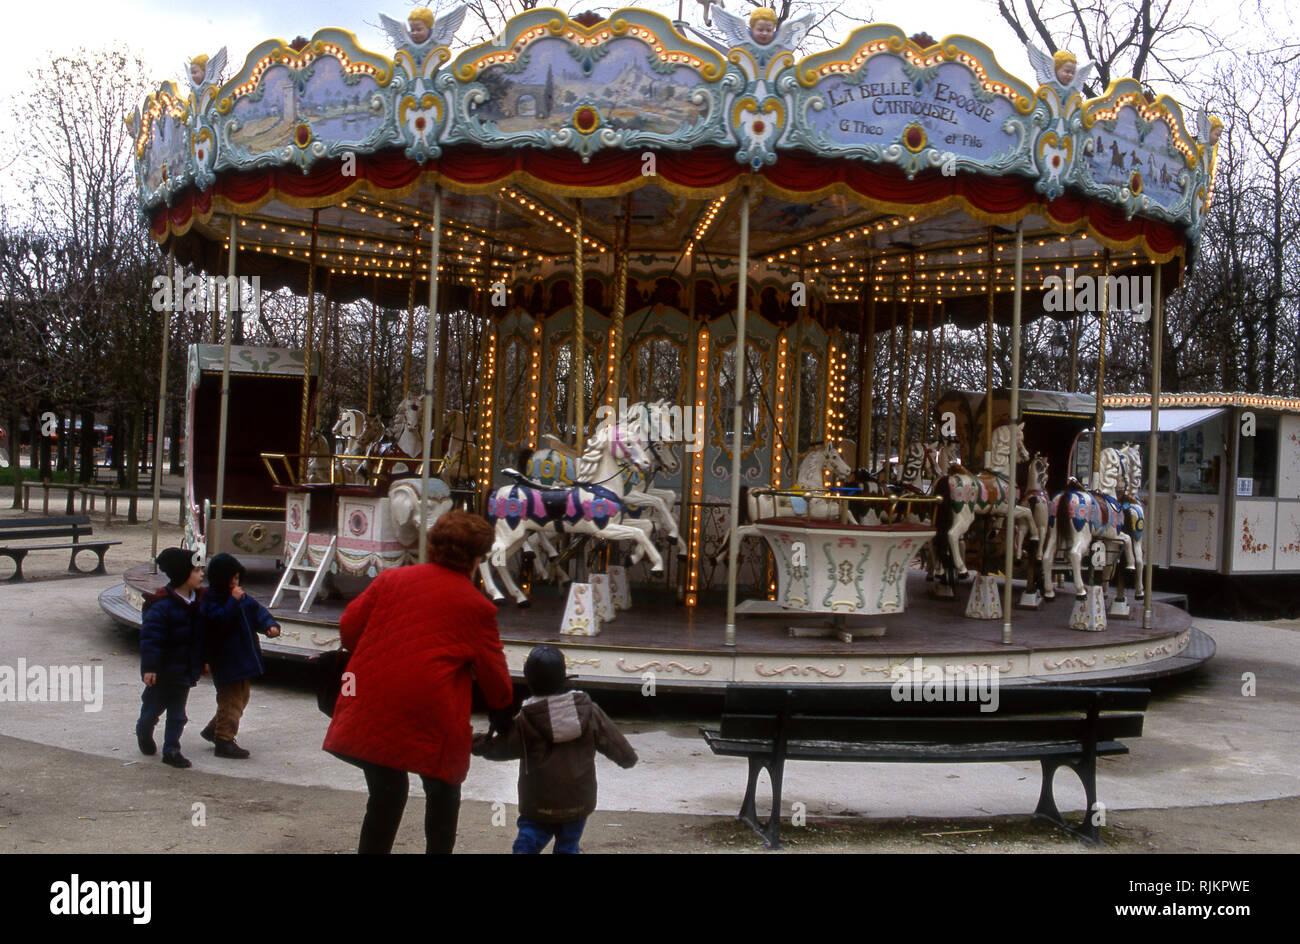 Antique carousel in park in Paris, France circa 1970s Stock Photo